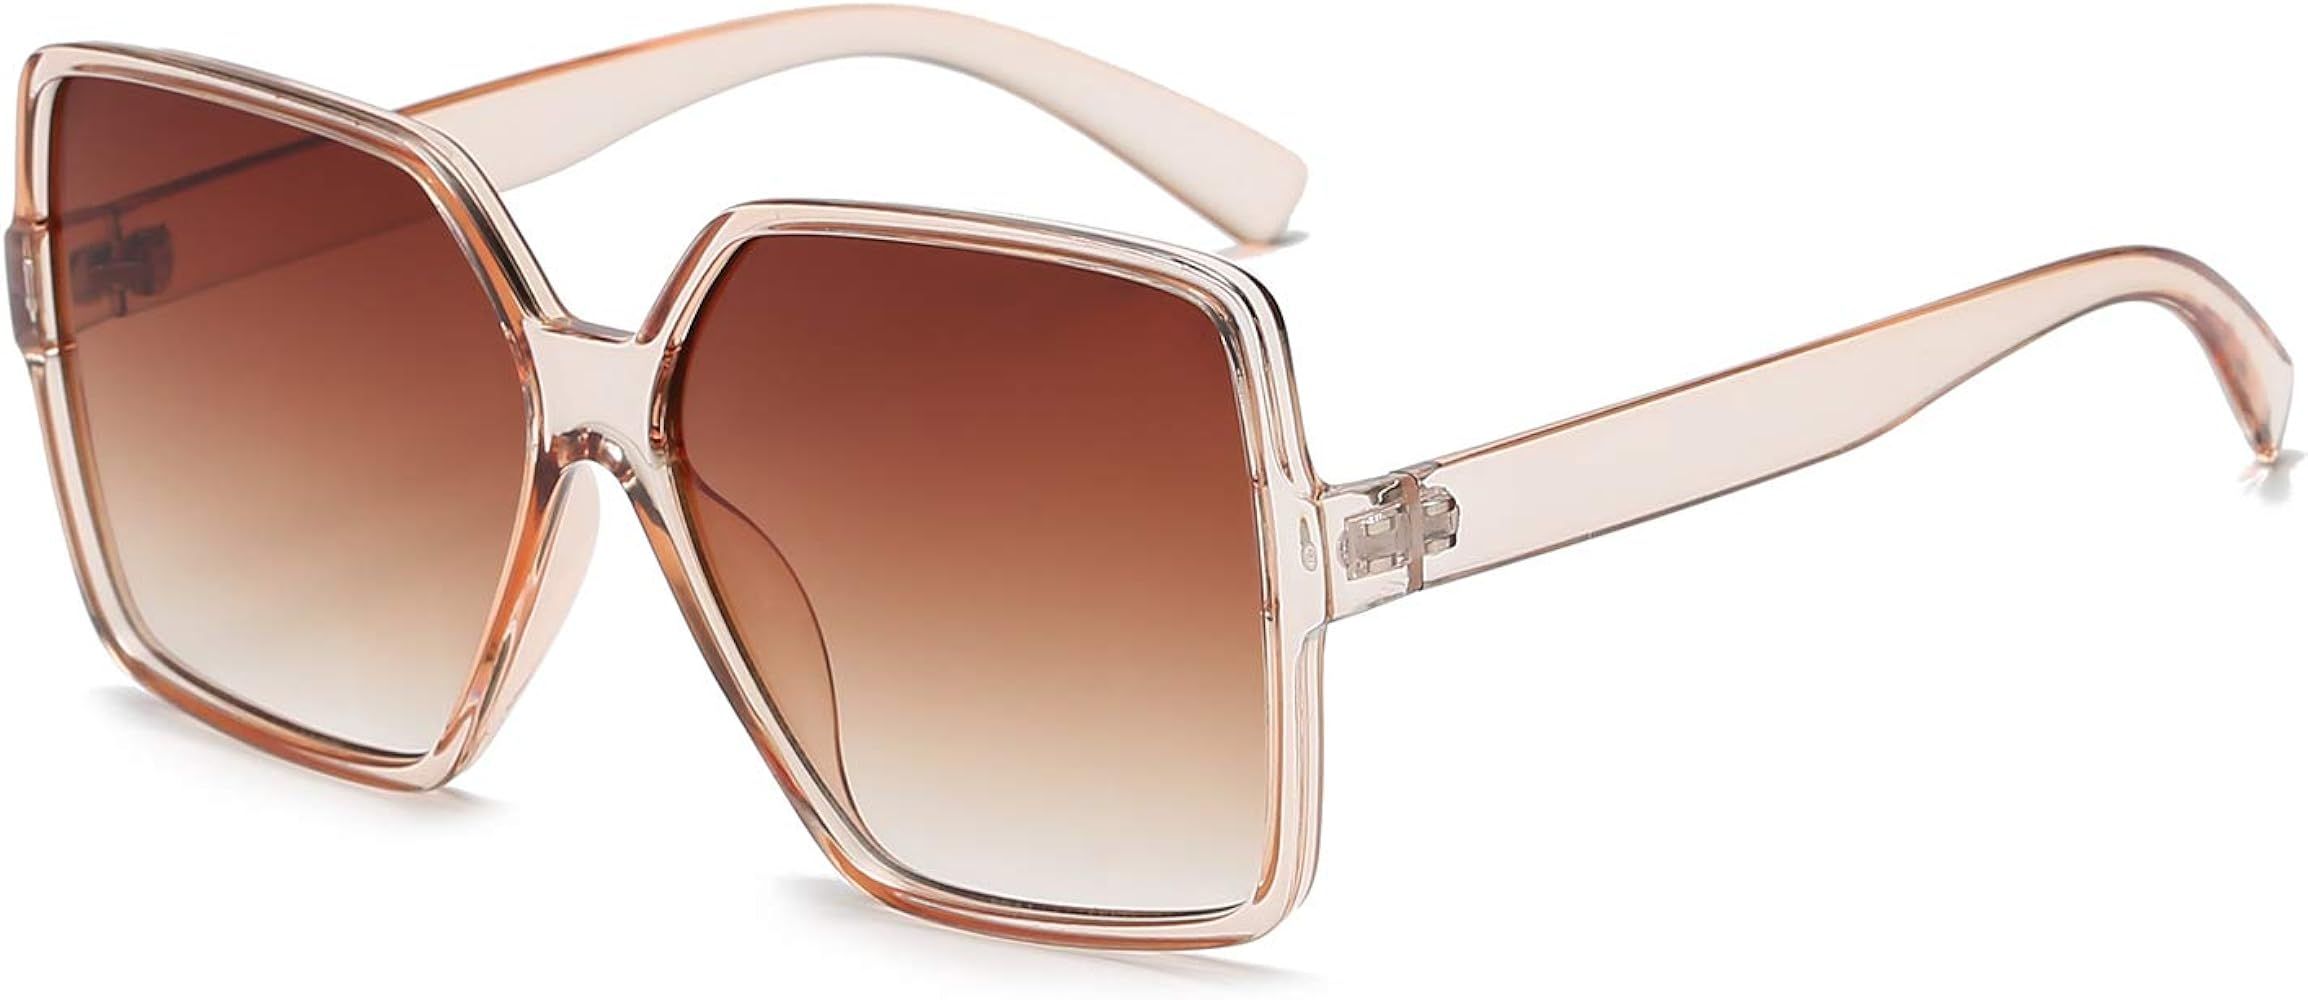 GRFISIA Square Oversized Sunglasses for Women Men Flat Top Fashion Shades | Amazon (US)